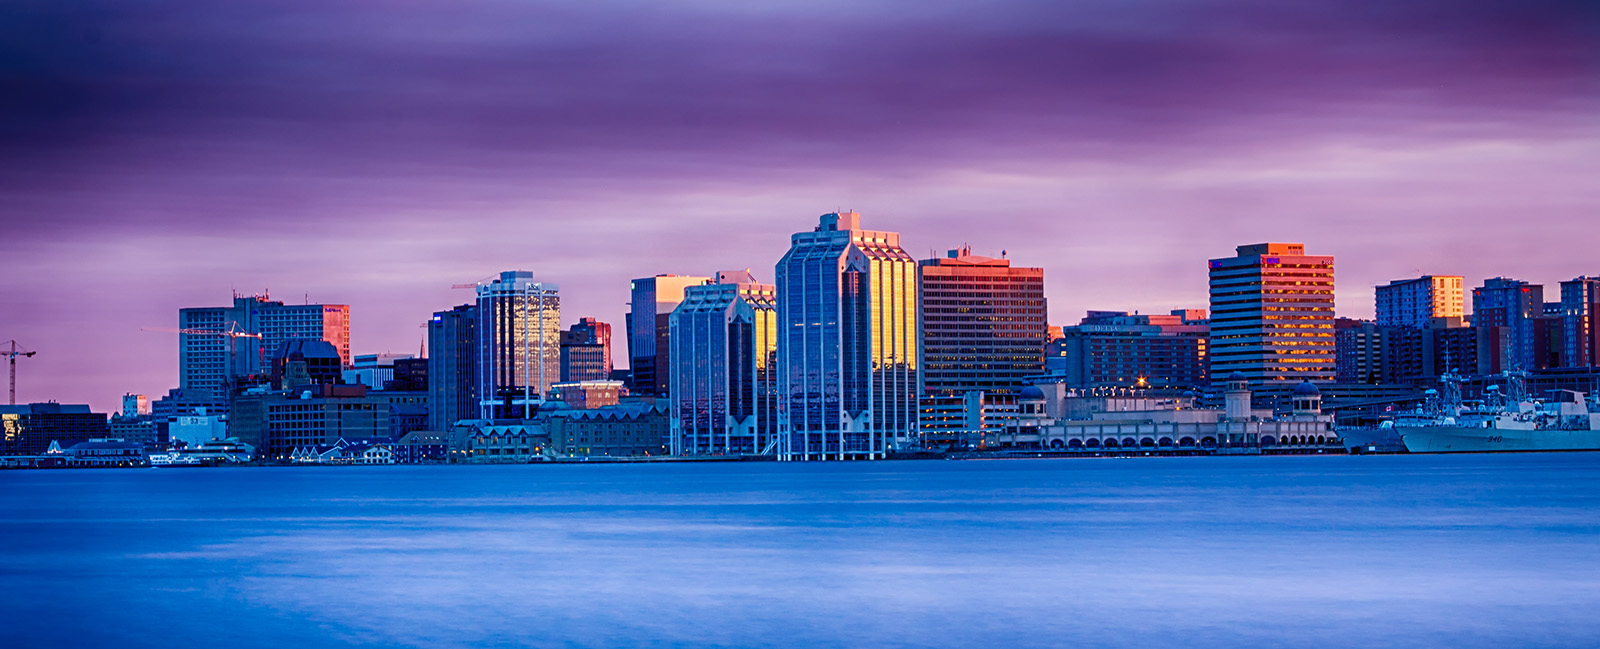 A beautiful image of the Halifax, Nova Scotia, Canada skyline at sunset